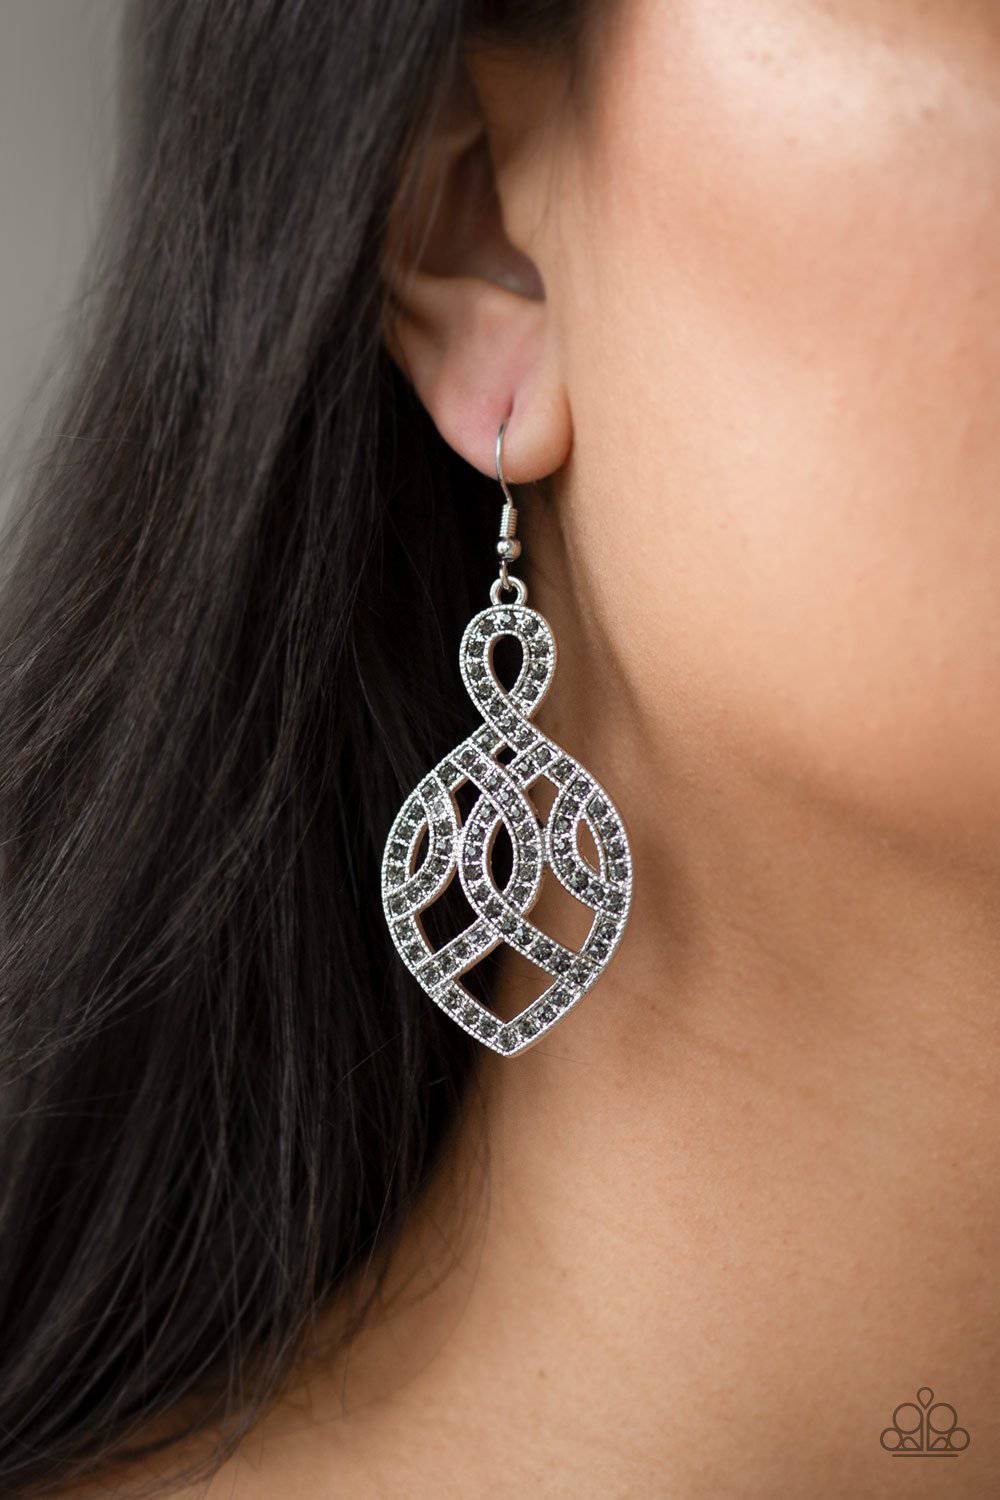 A Grand Statement - Silver Rhinestone Earrings - Paparazzi Accessories - GlaMarous Titi Jewels